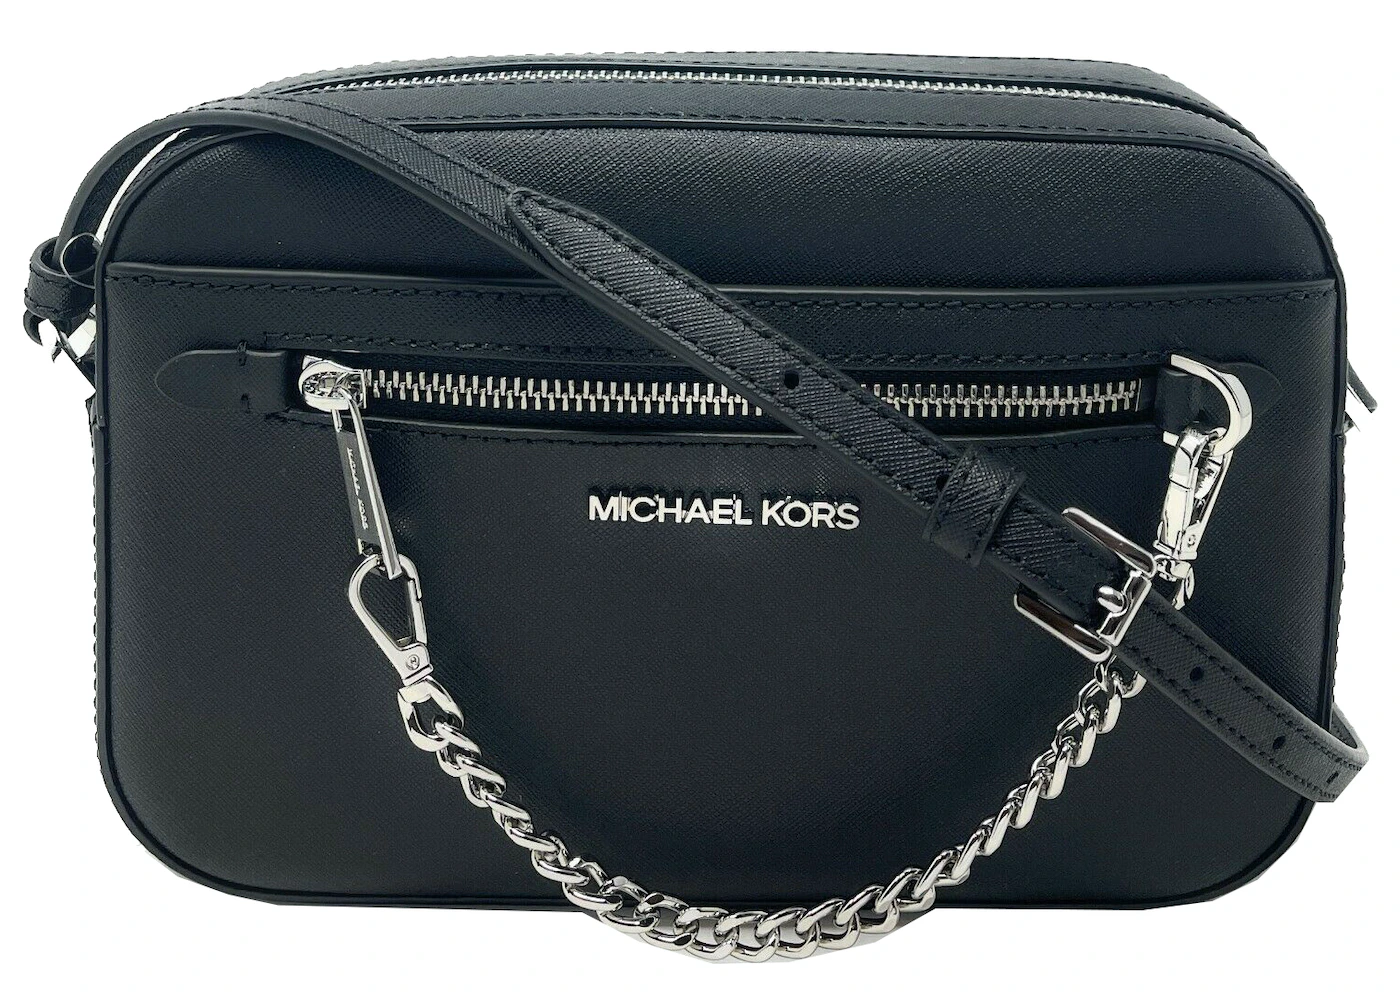 Michael Kors Jet Set Zip Chain Crossbody Bag Large Black/Silver in ...